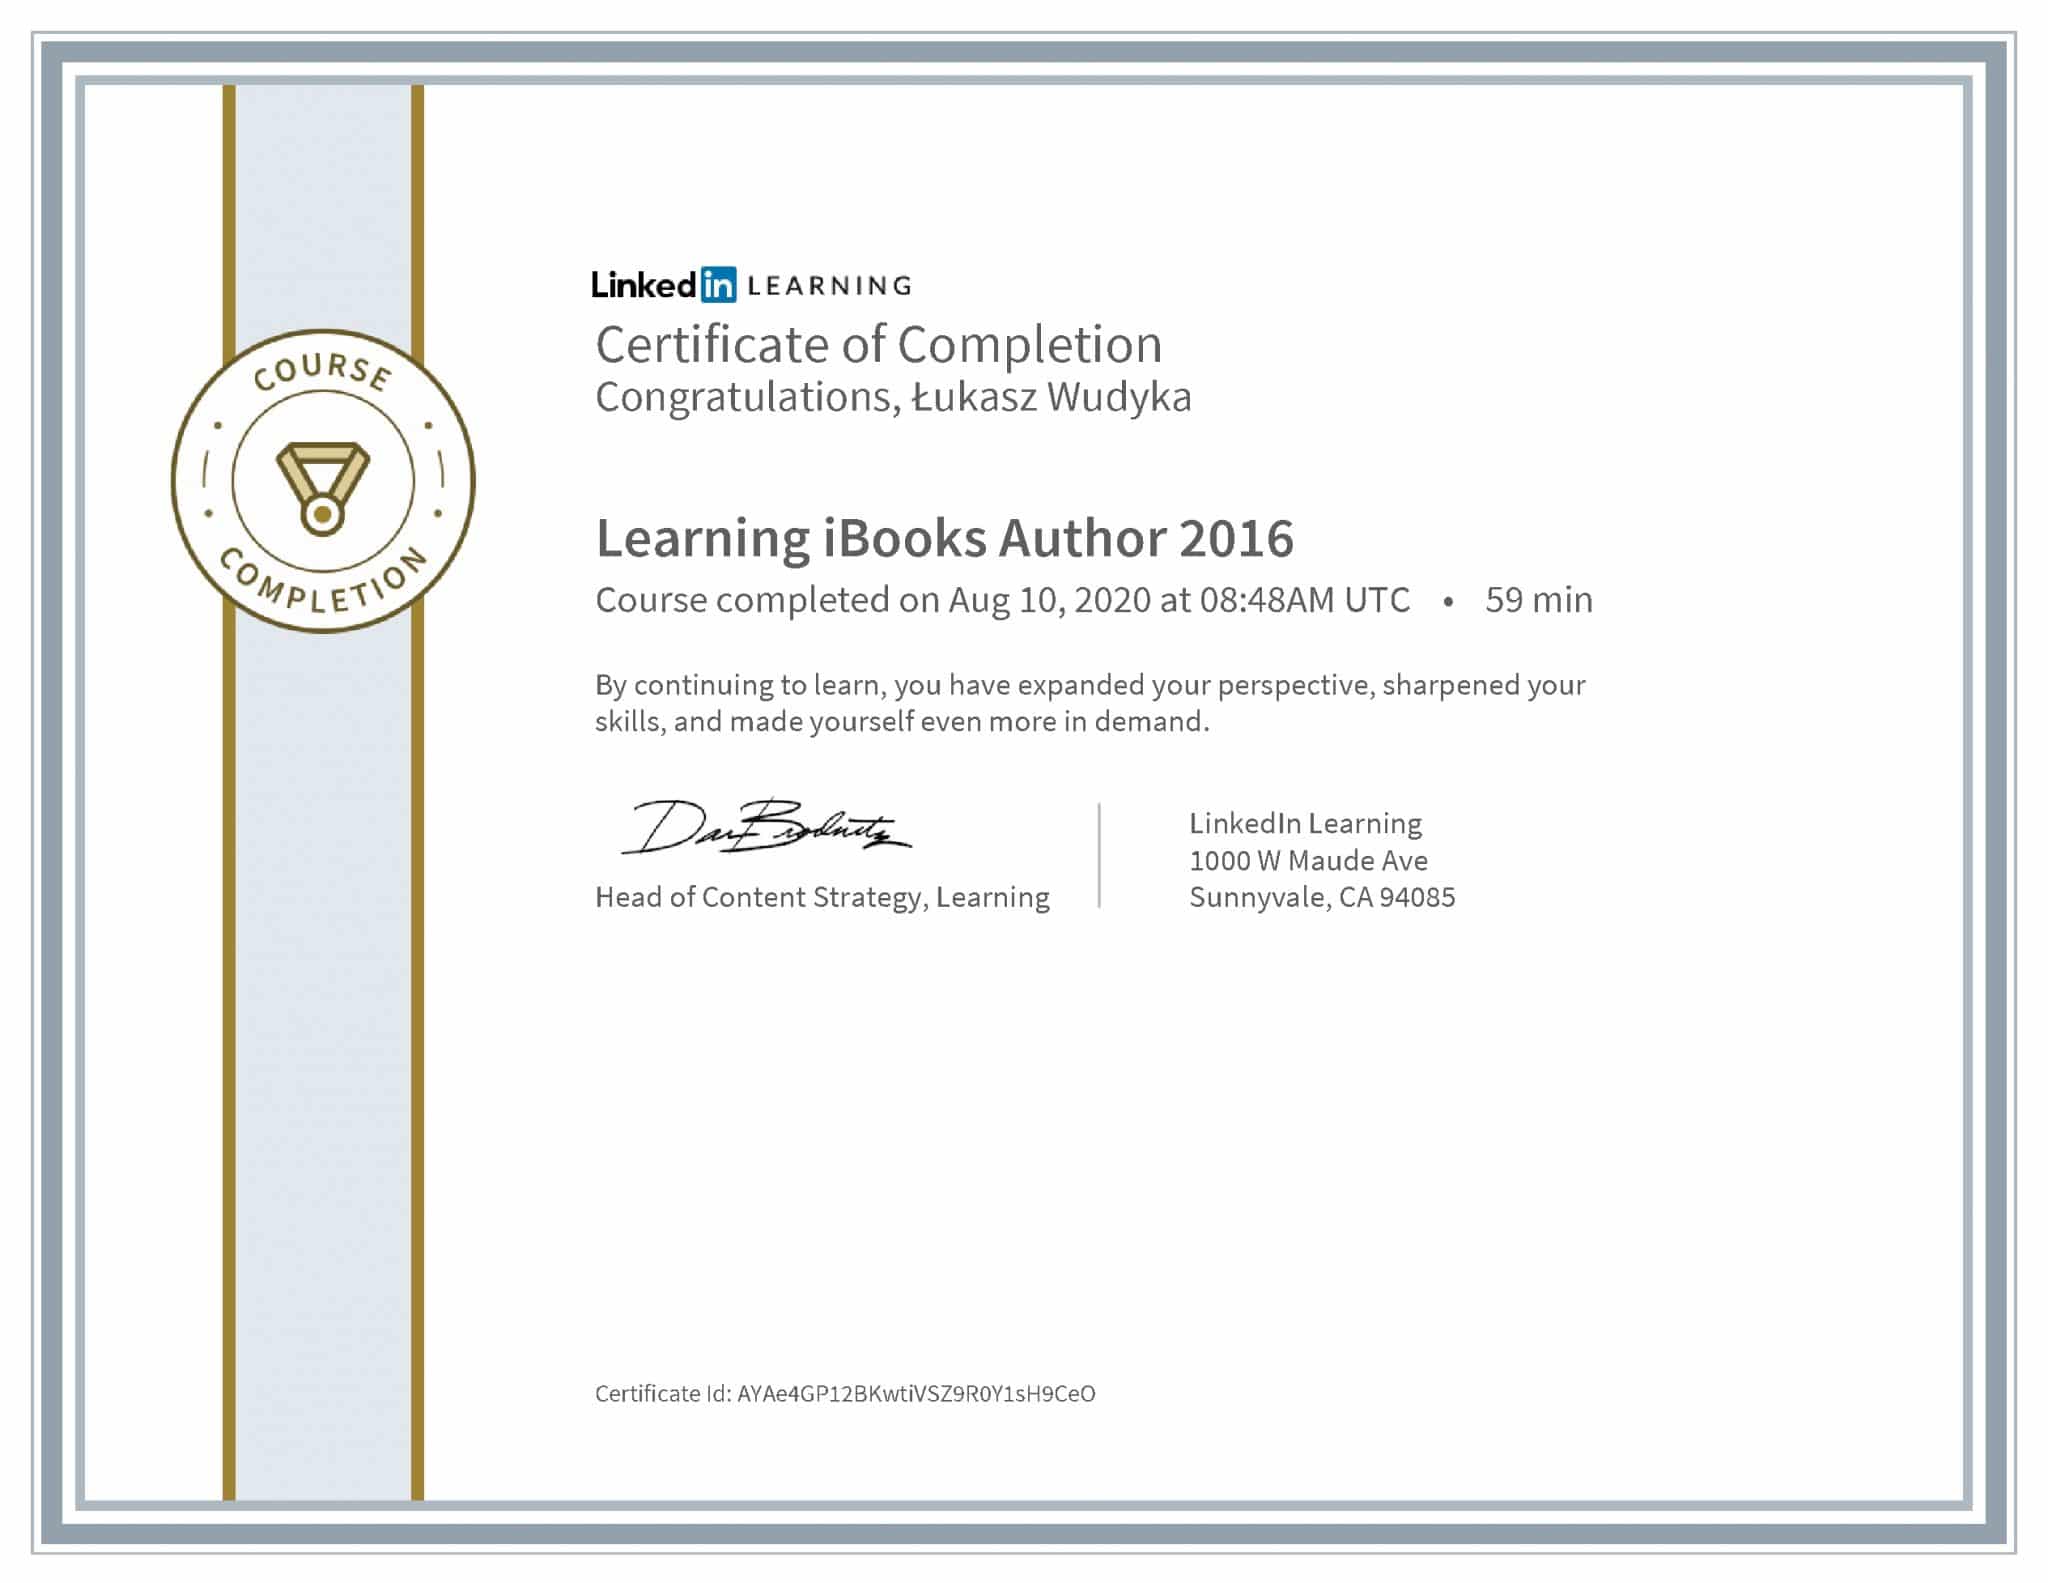 Łukasz Wudyka certyfikat LinkedIn Learning iBooks Author 2016